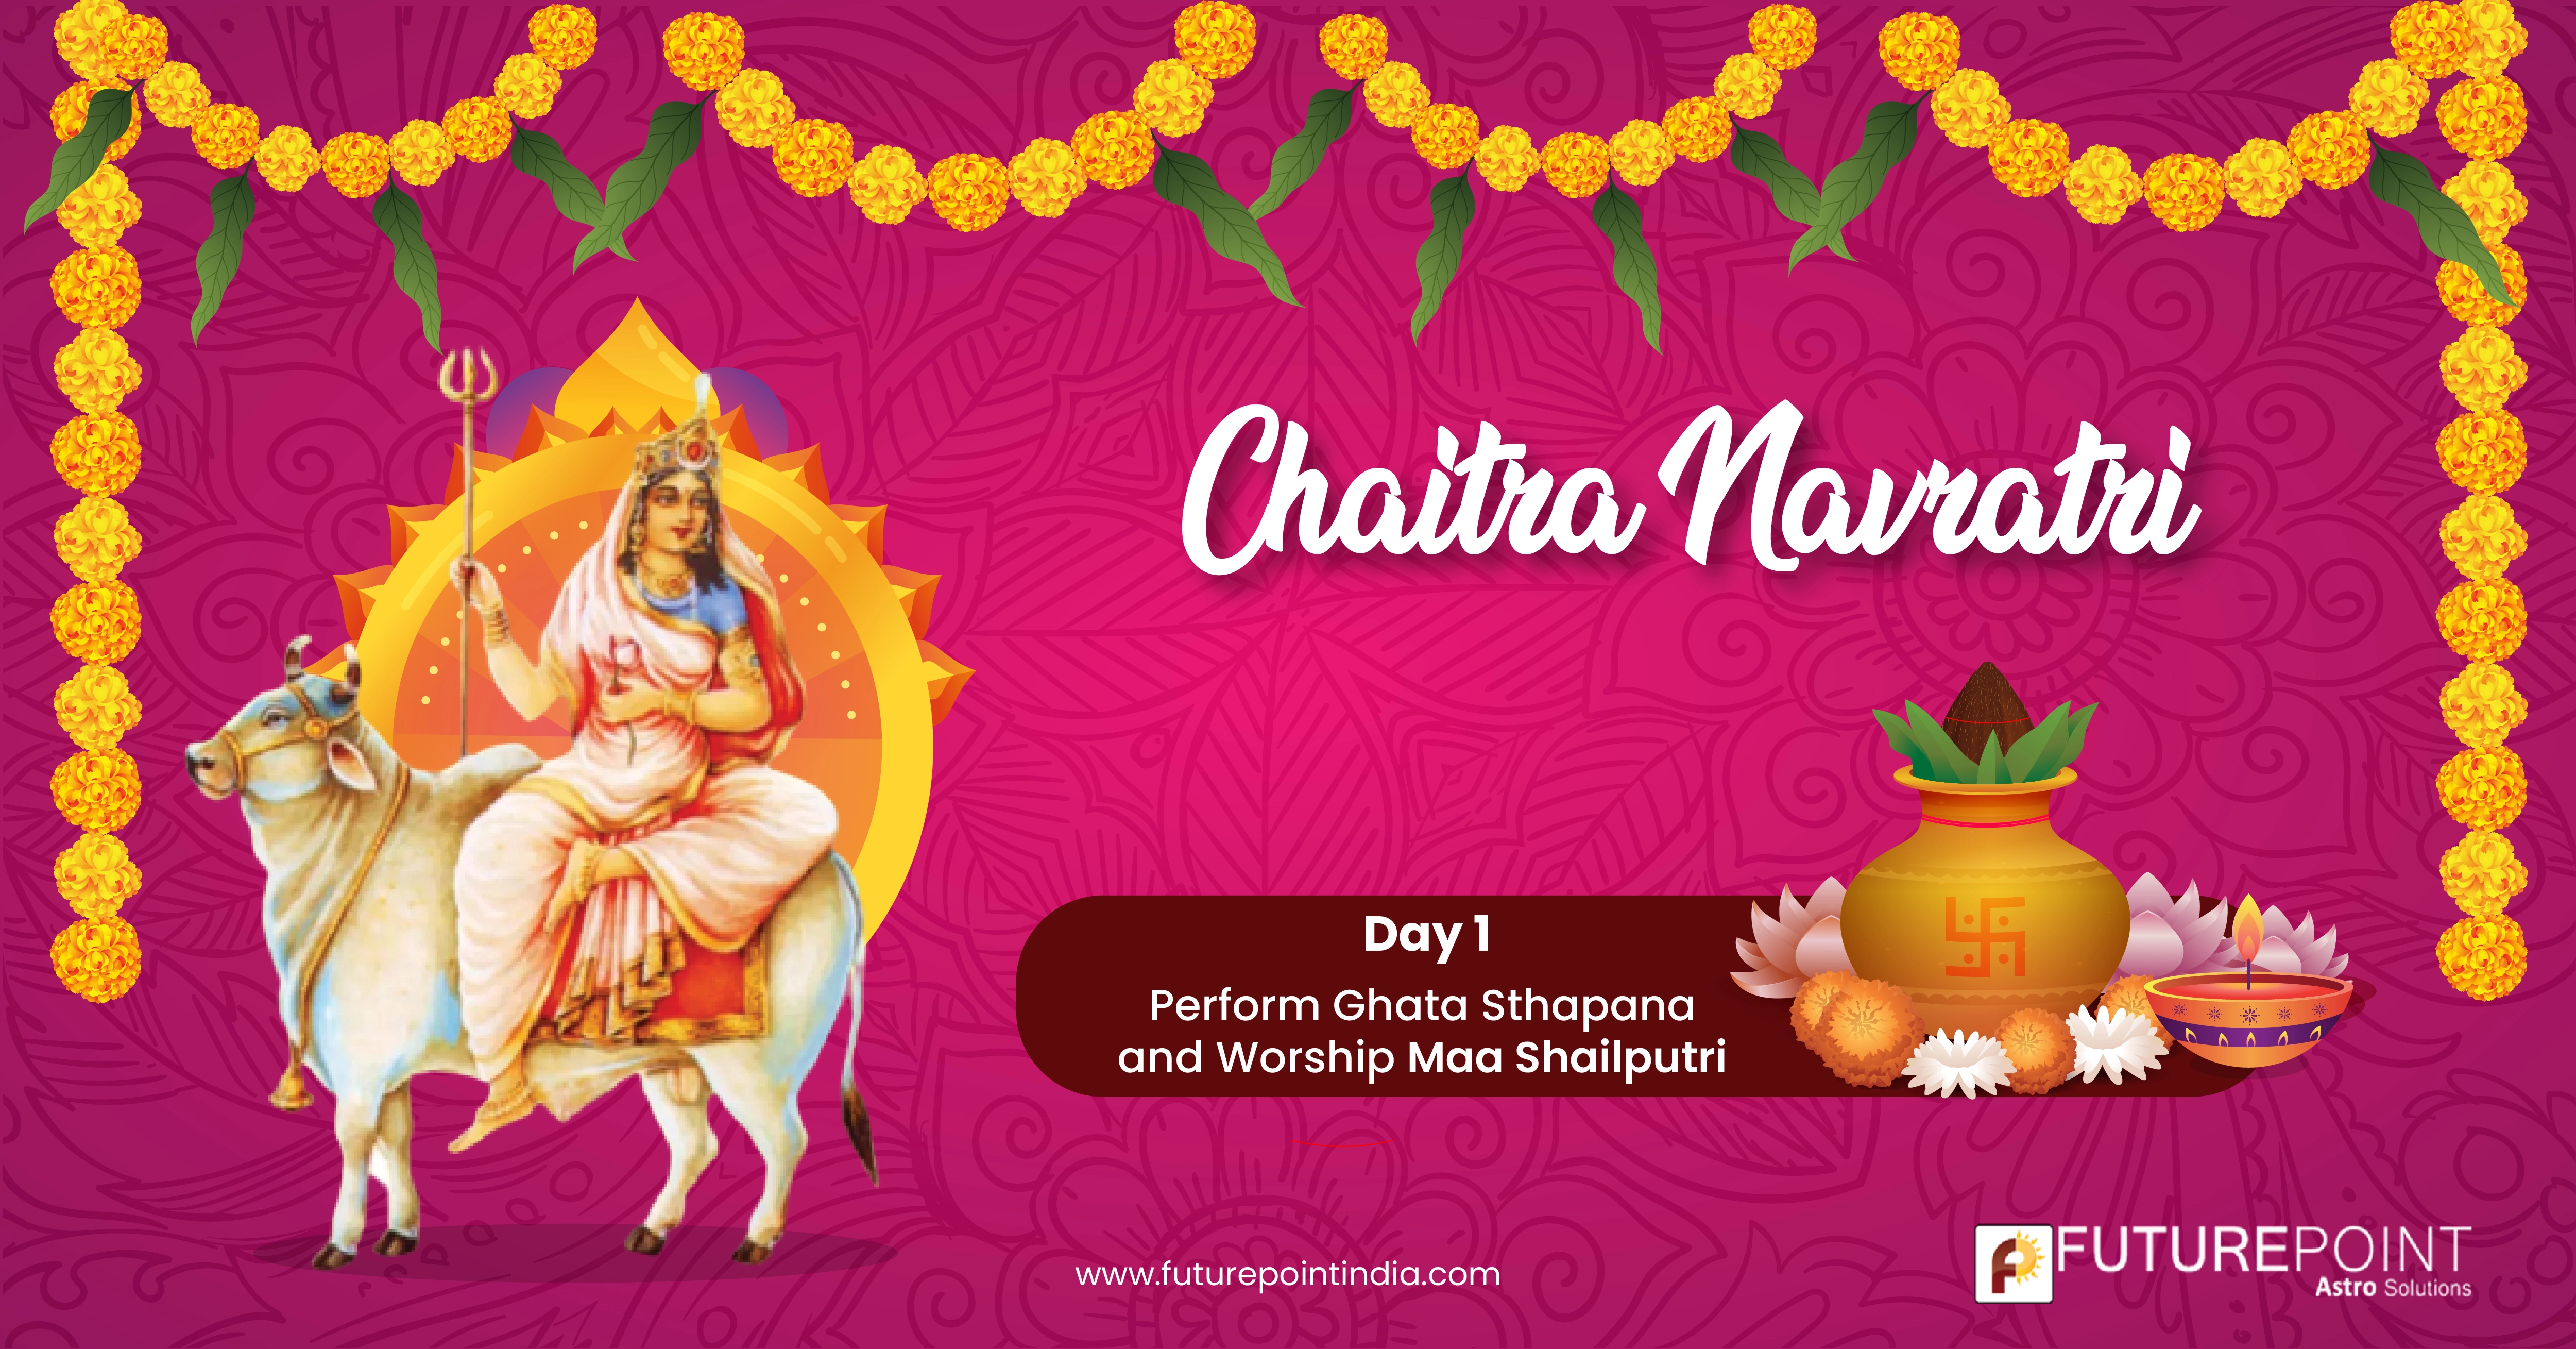 Day 1: Perform Ghata Sthapana and worship Maa Shailputri